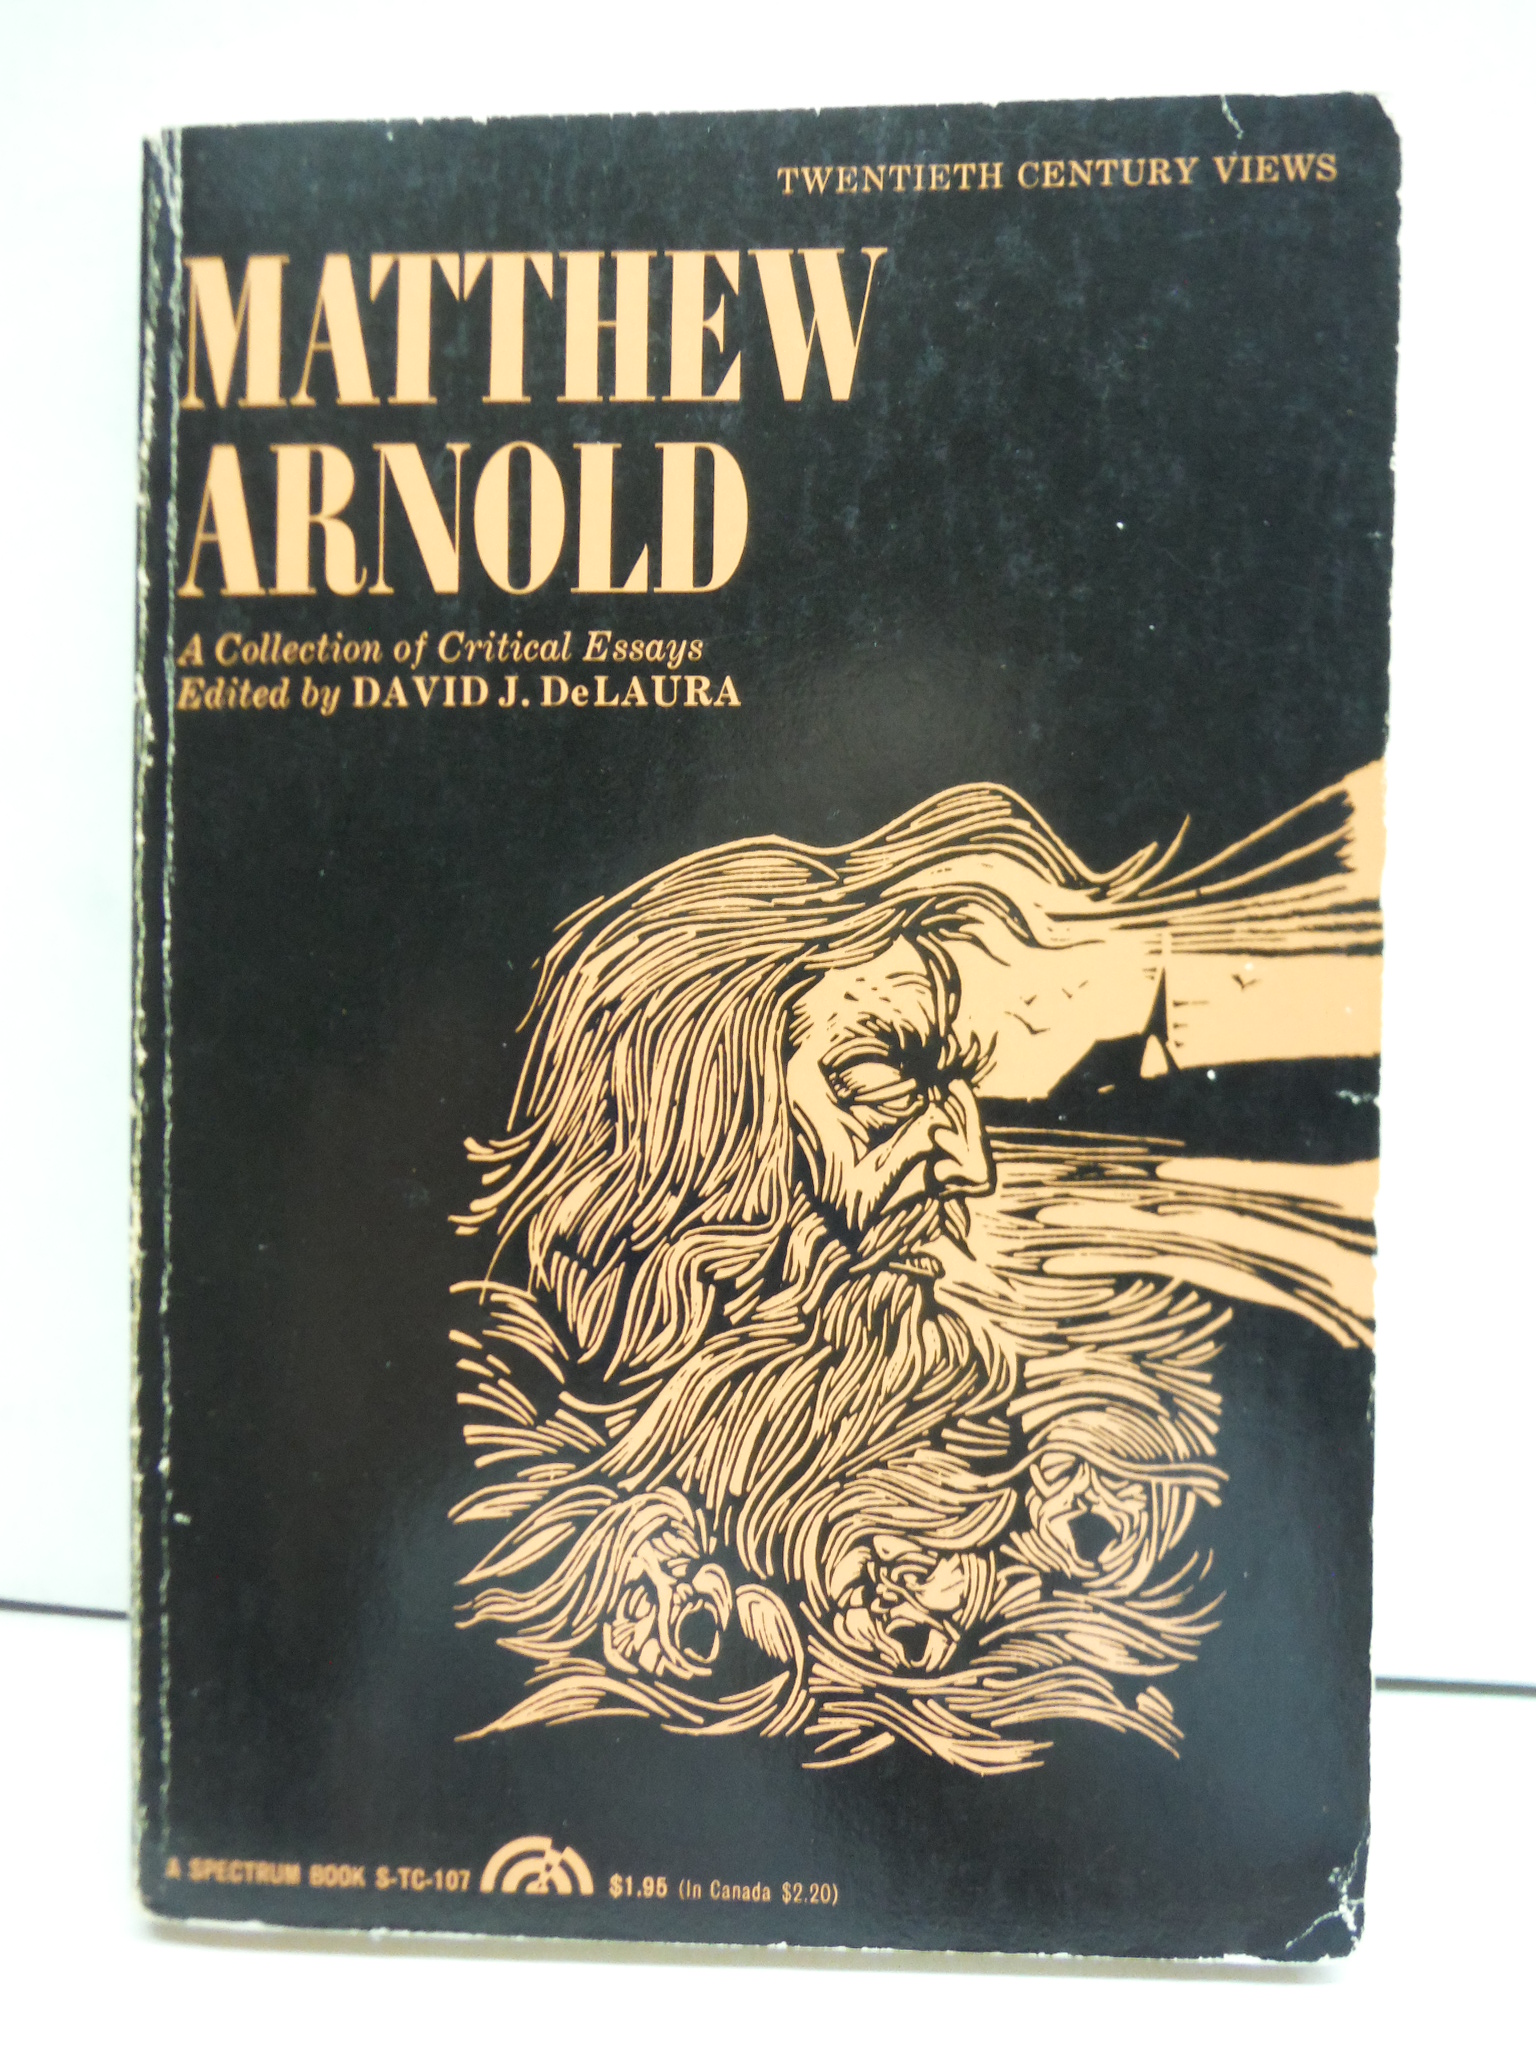 Matthew Arnold: a collection of critical essays, (Twentieth century views)